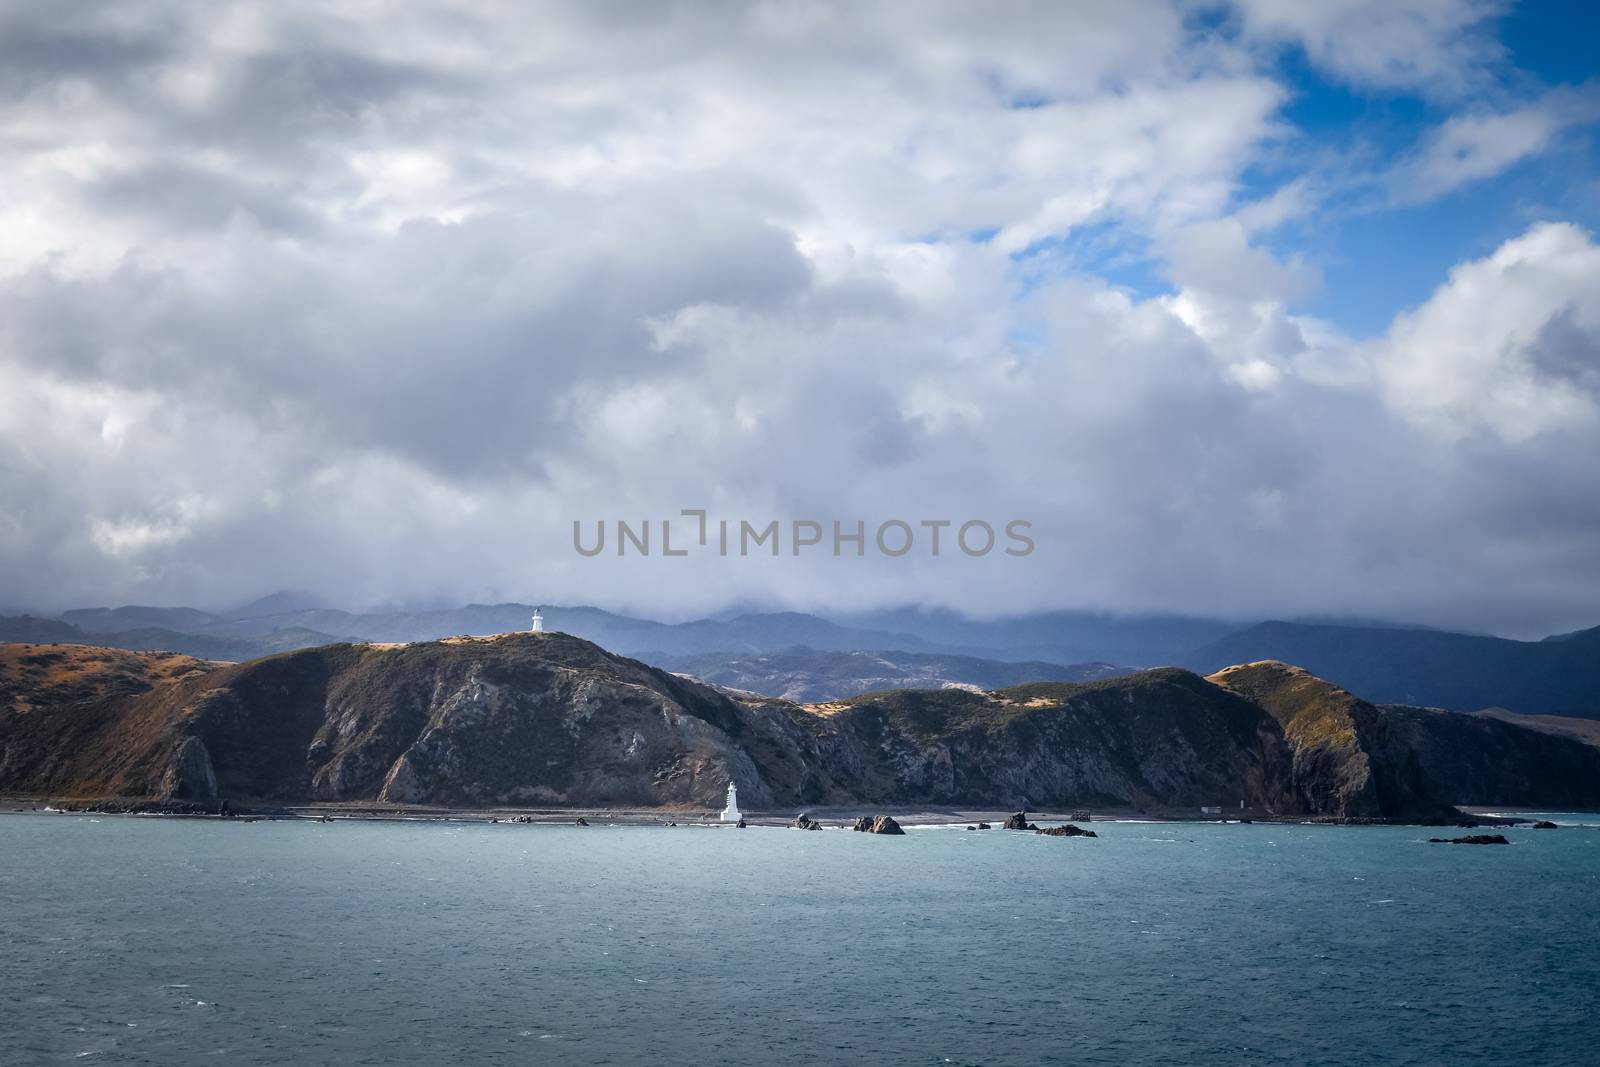 Lighthouse on cliffs near Wellington, New Zealand by daboost